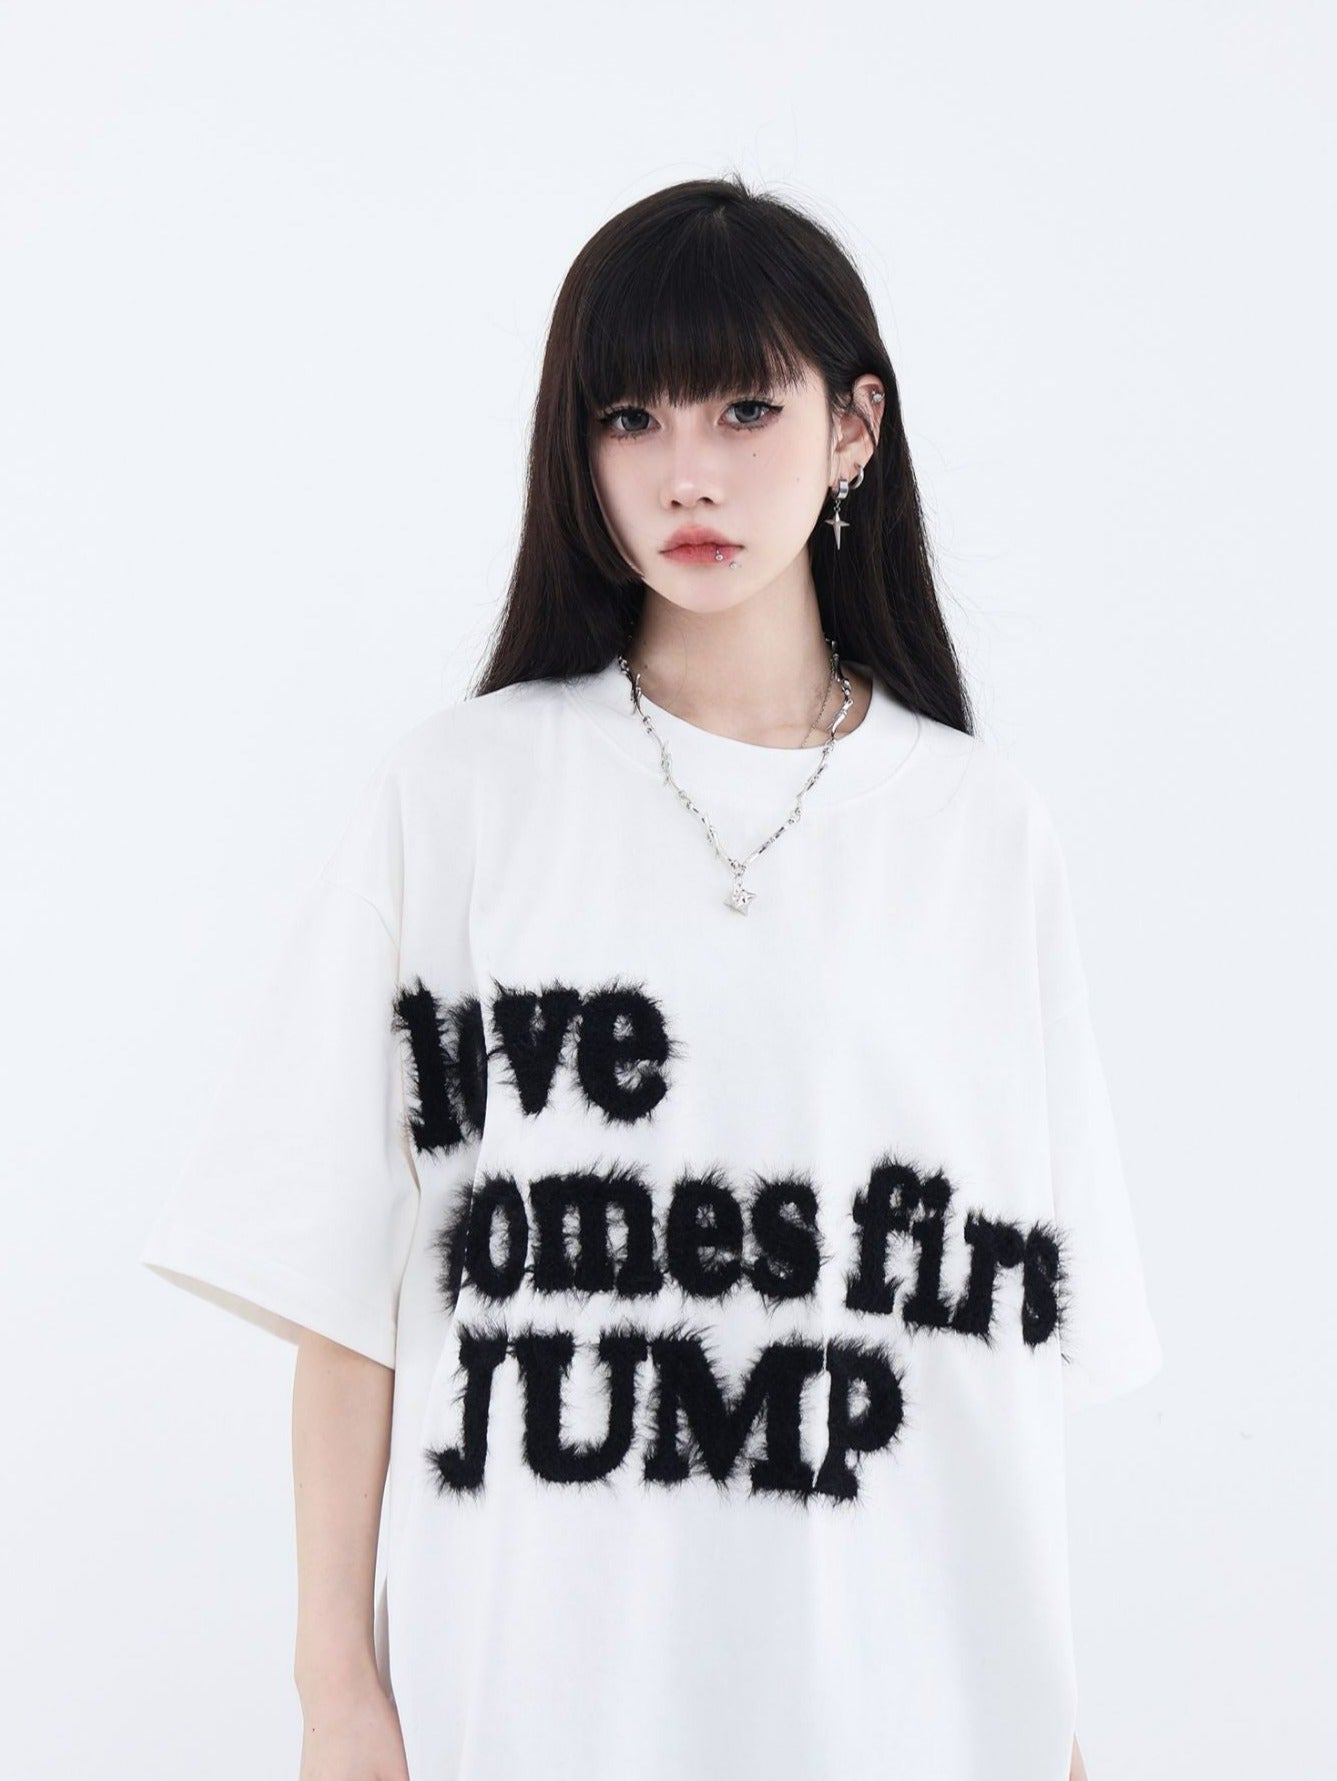 Fluffy Logo Embroidered T-Shirt Korean Street Fashion T-Shirt By Jump Next Shop Online at OH Vault